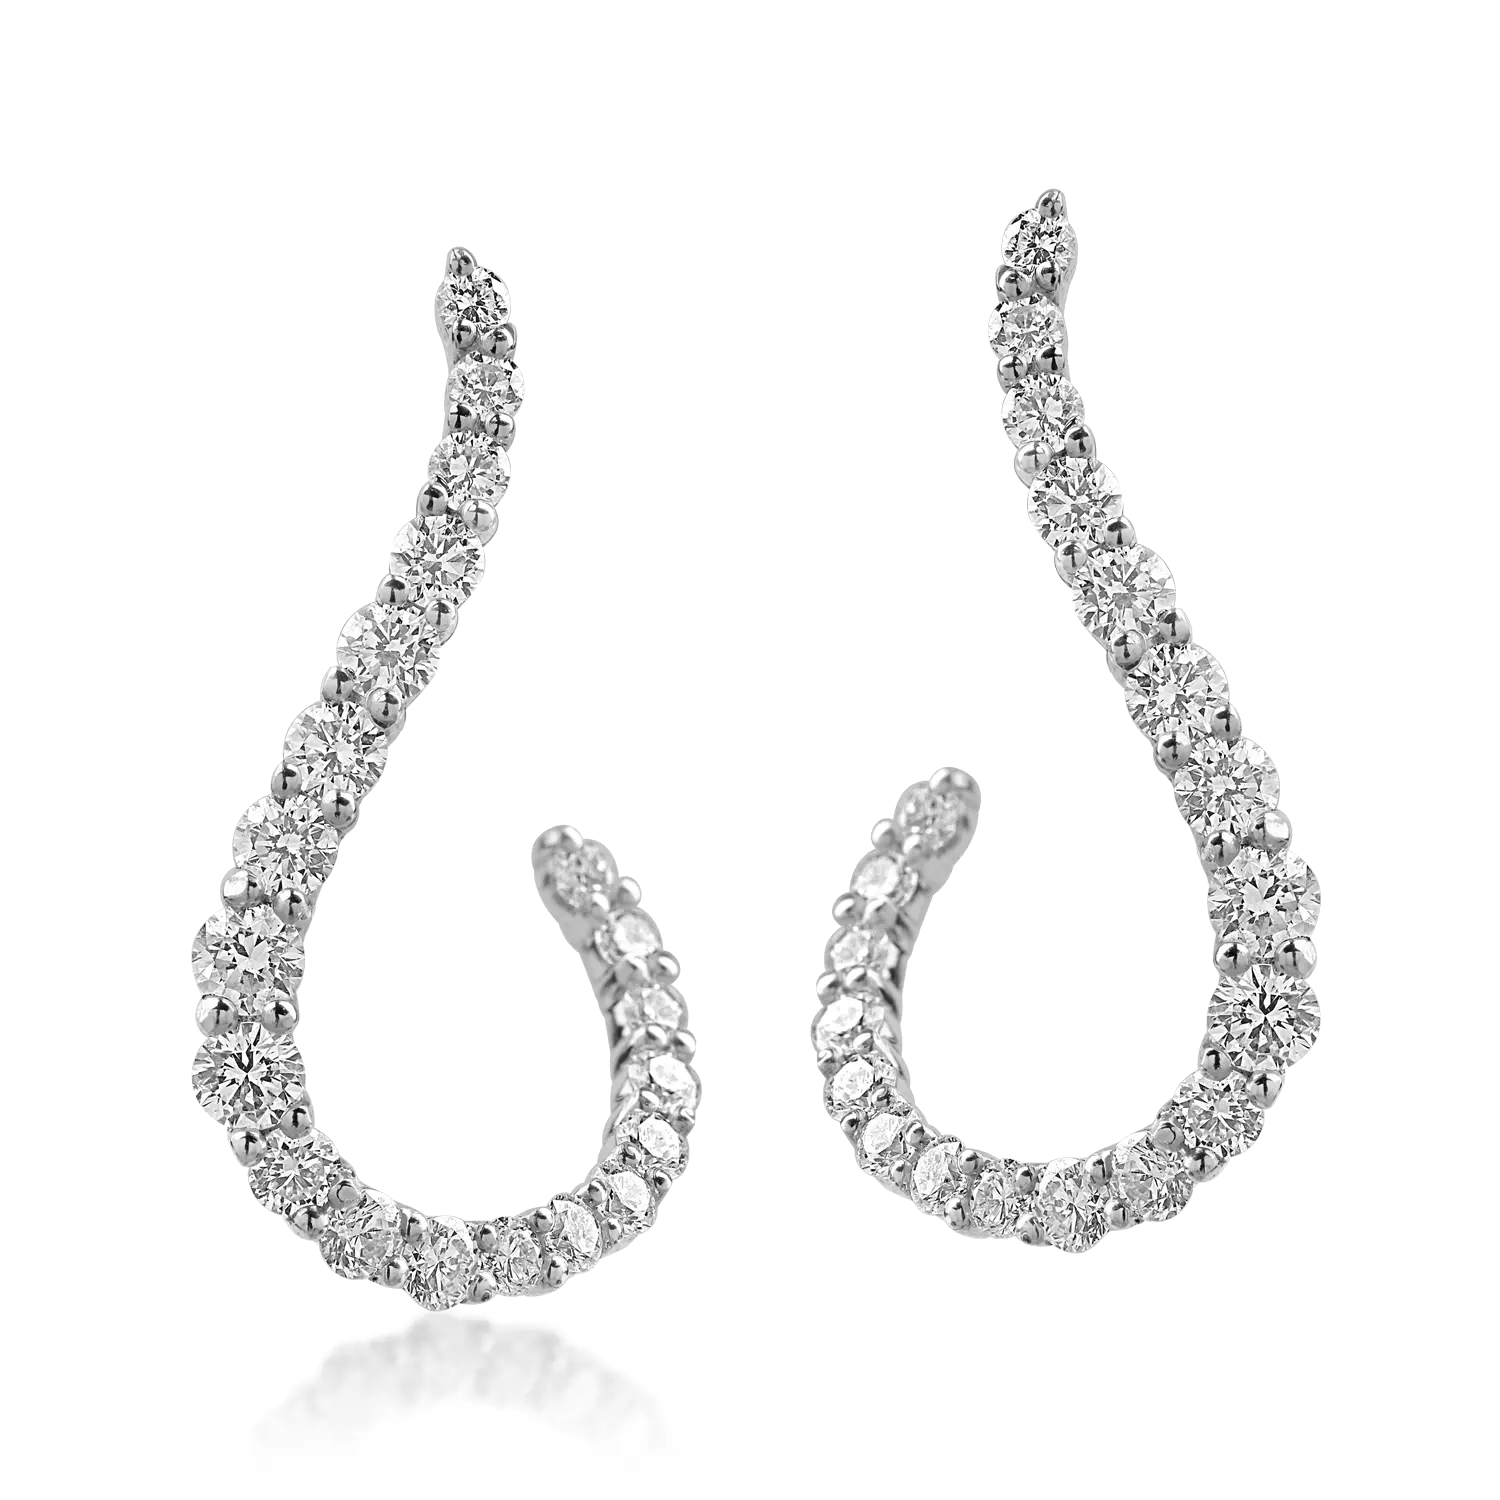 White gold geometric earrings with 0.8ct diamonds